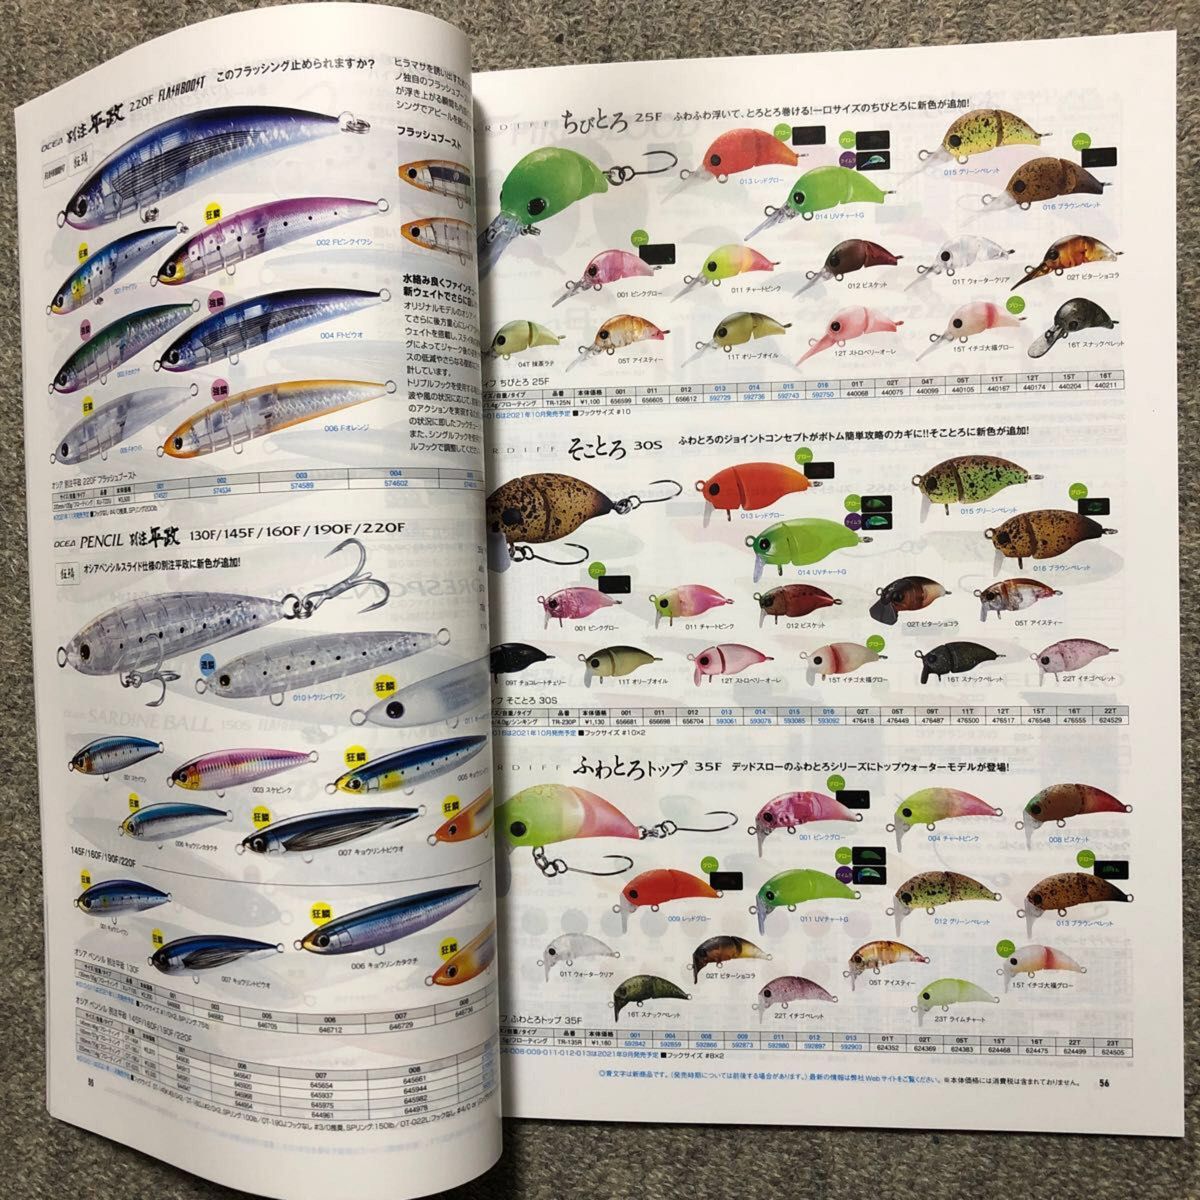 SHIMANO /2021 Fishing Tackle AW catalogue / フィッシング カタログ 1冊 / 送料無料